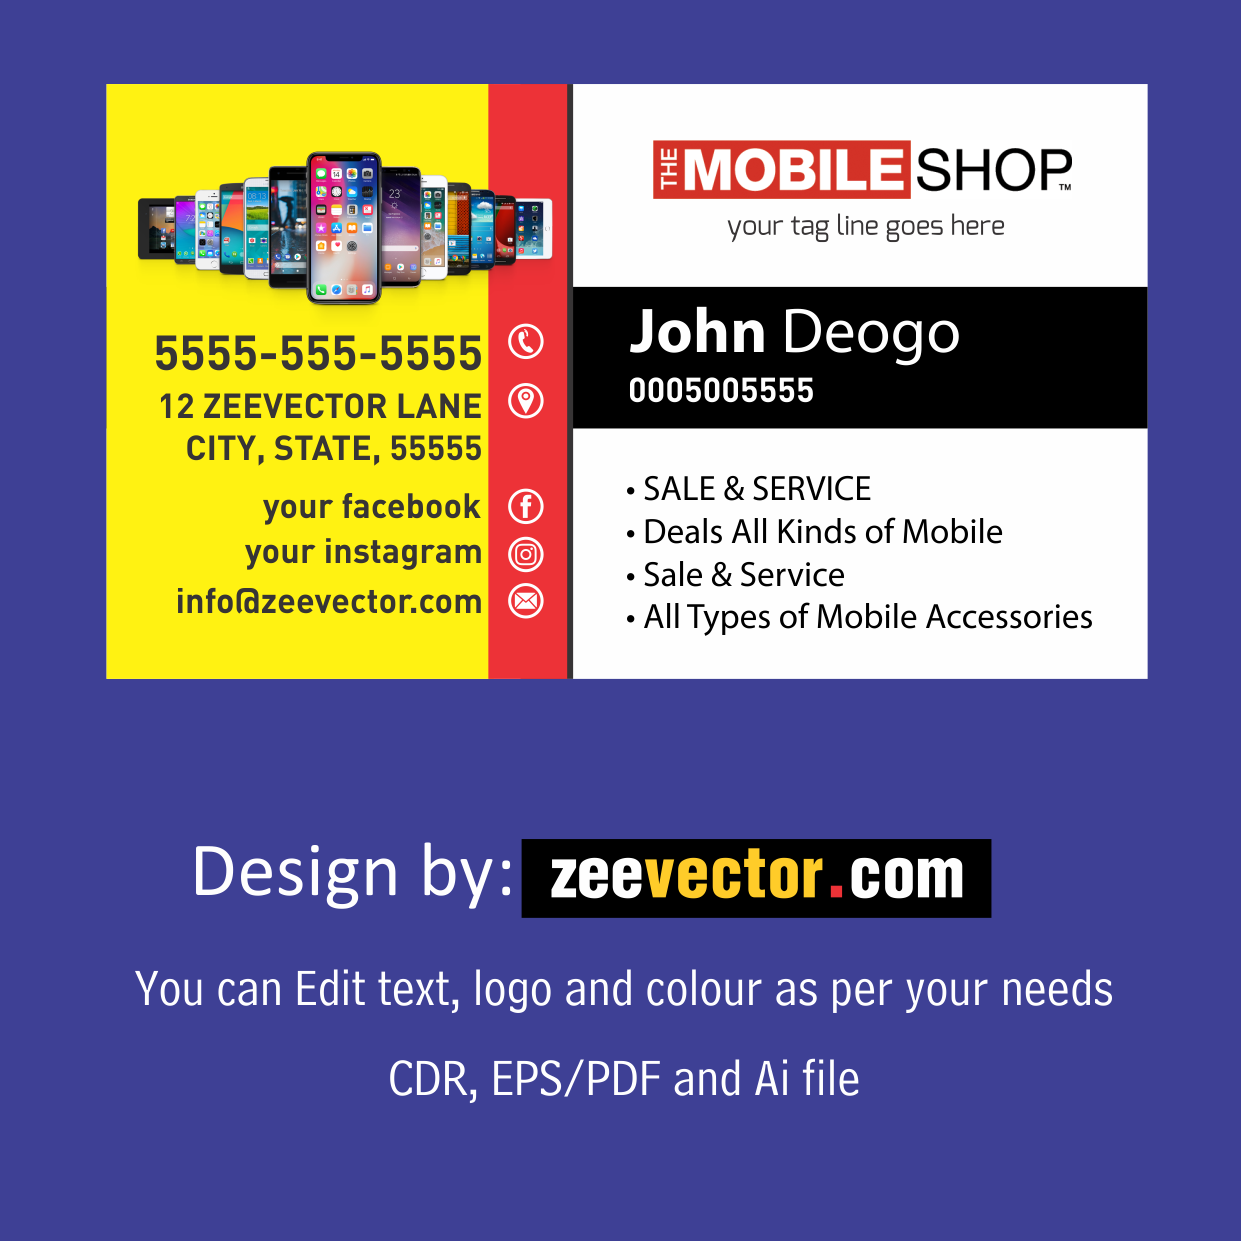 Mobile Shop Business Card Design Free Download - FREE Vector Design